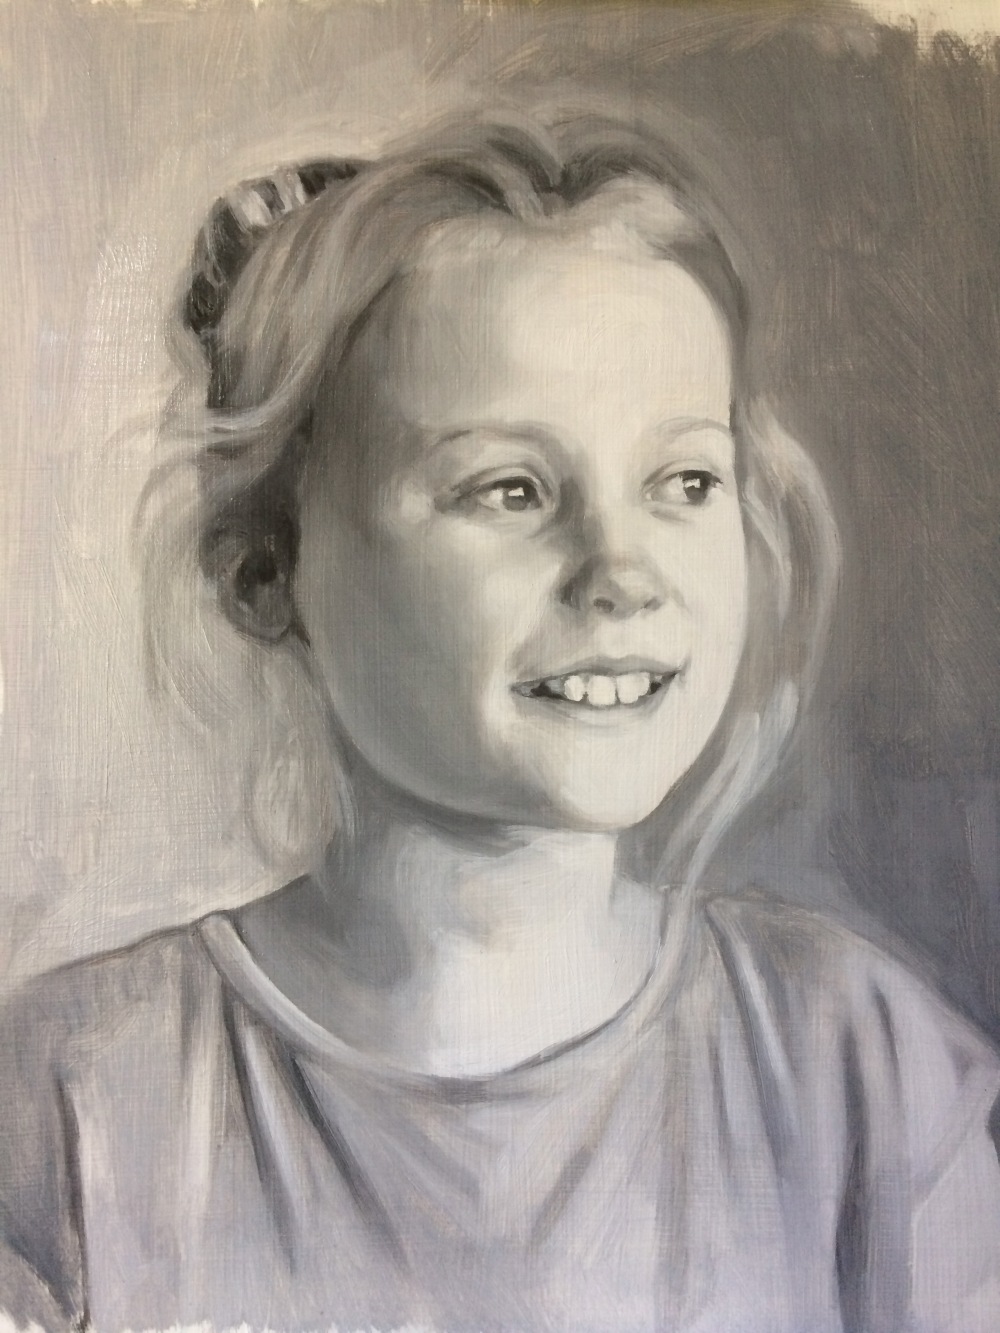 Custom portrait commission of a girl laughing, child portrait in oil paint by portrait painter and artist Matt Harvey